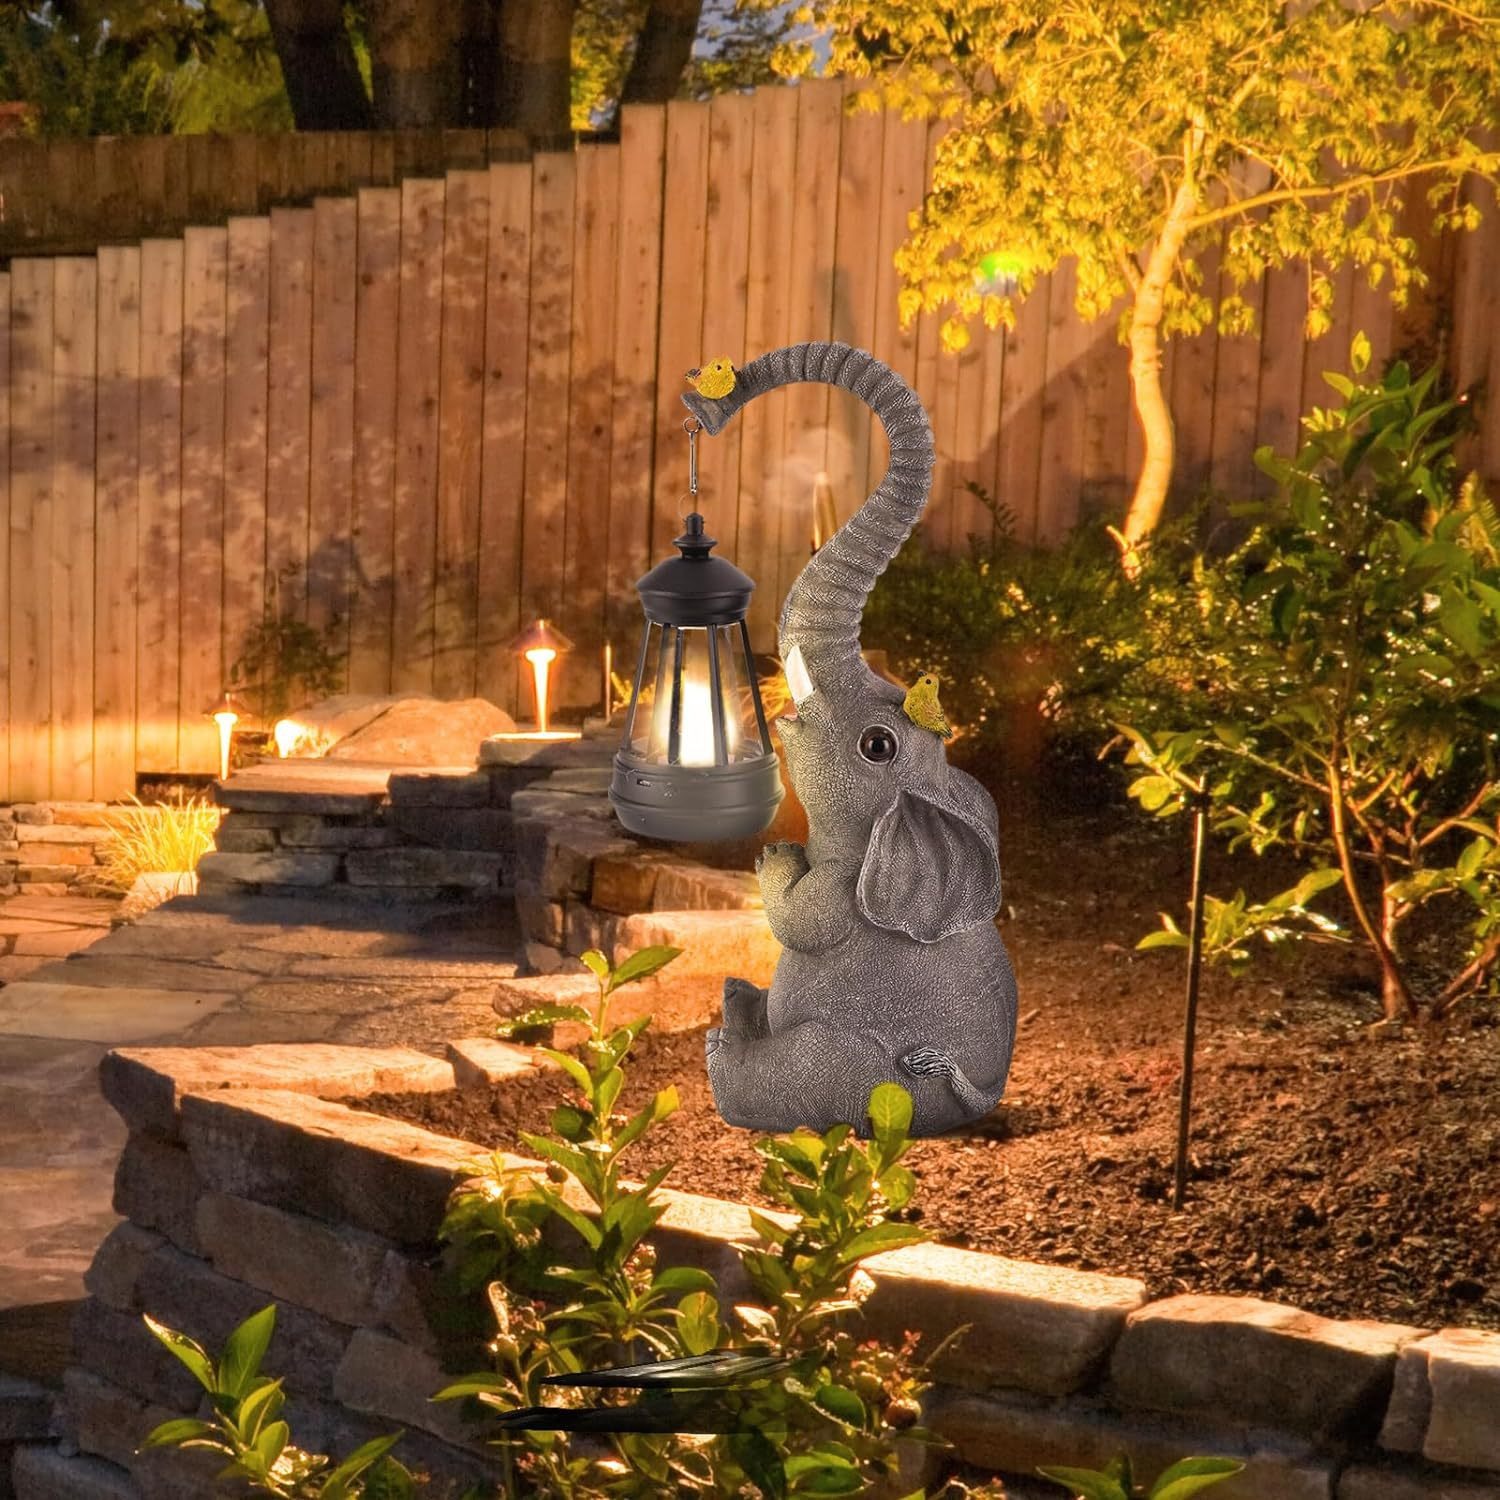 Solar Outdoor Garden Statues Lights, Elephant Figurine Decor